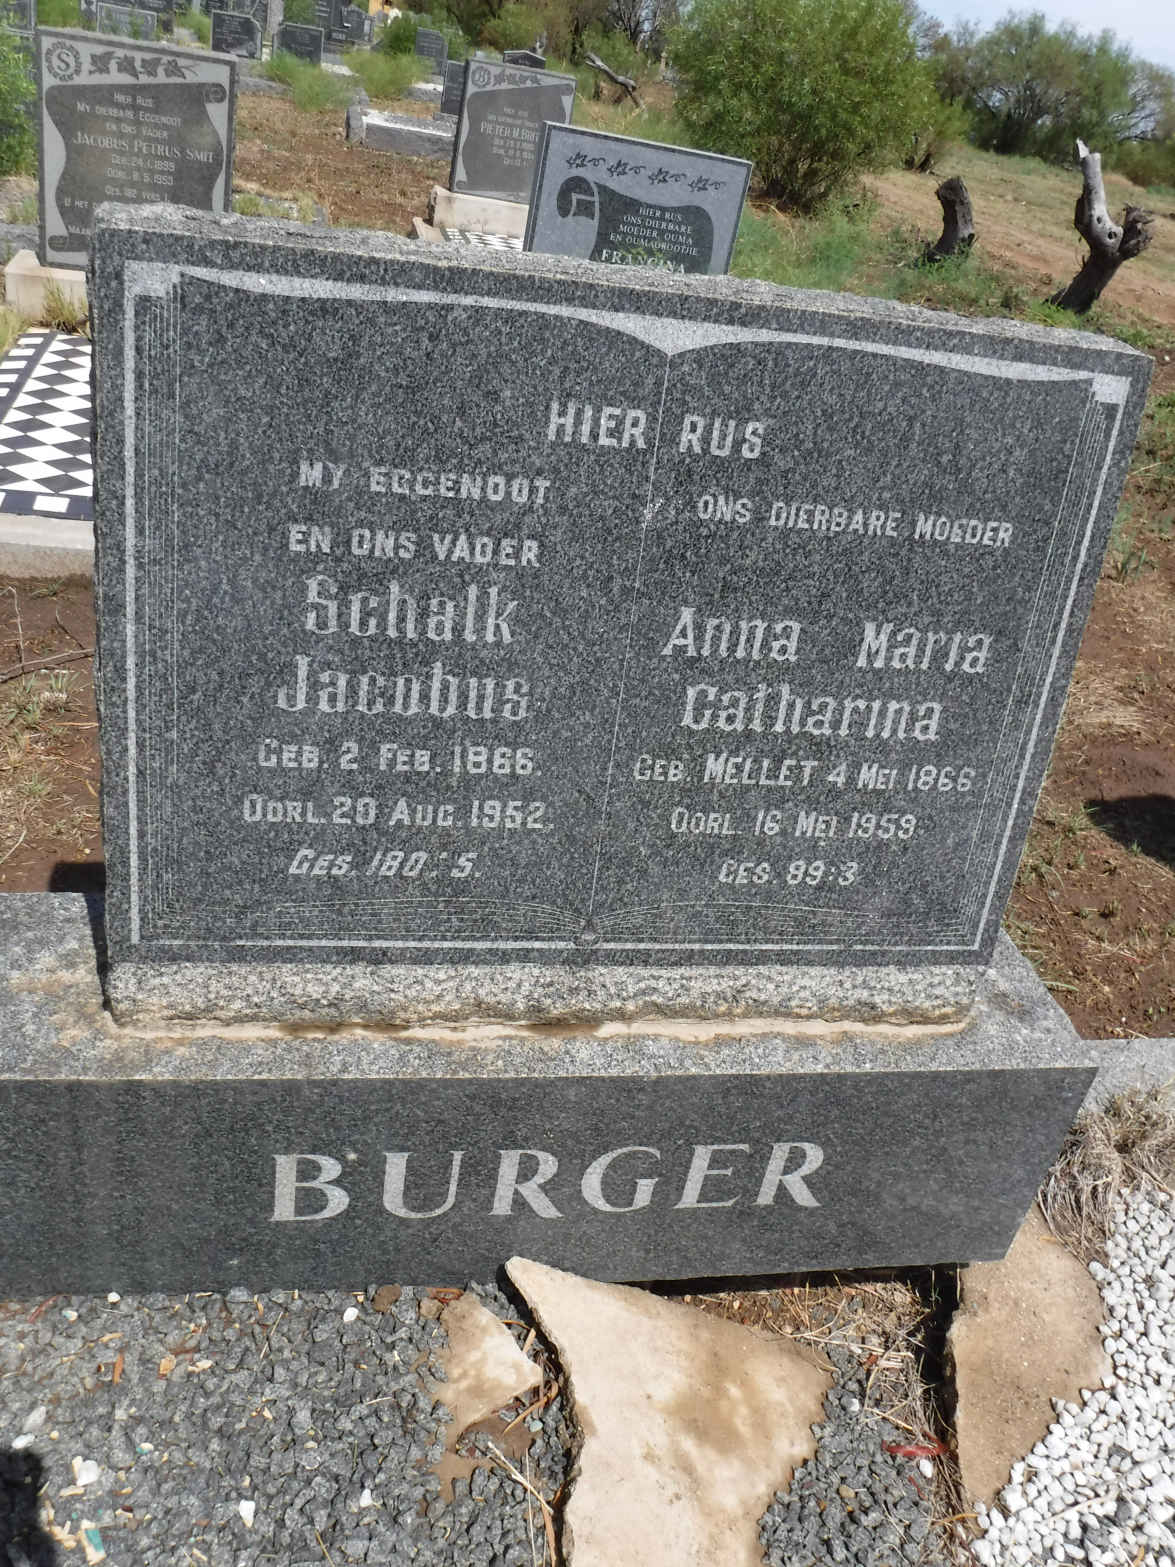 BURGER Schalk Jacobus 1866-1952 & Anna Maria Catharina MELLET 1866-1959